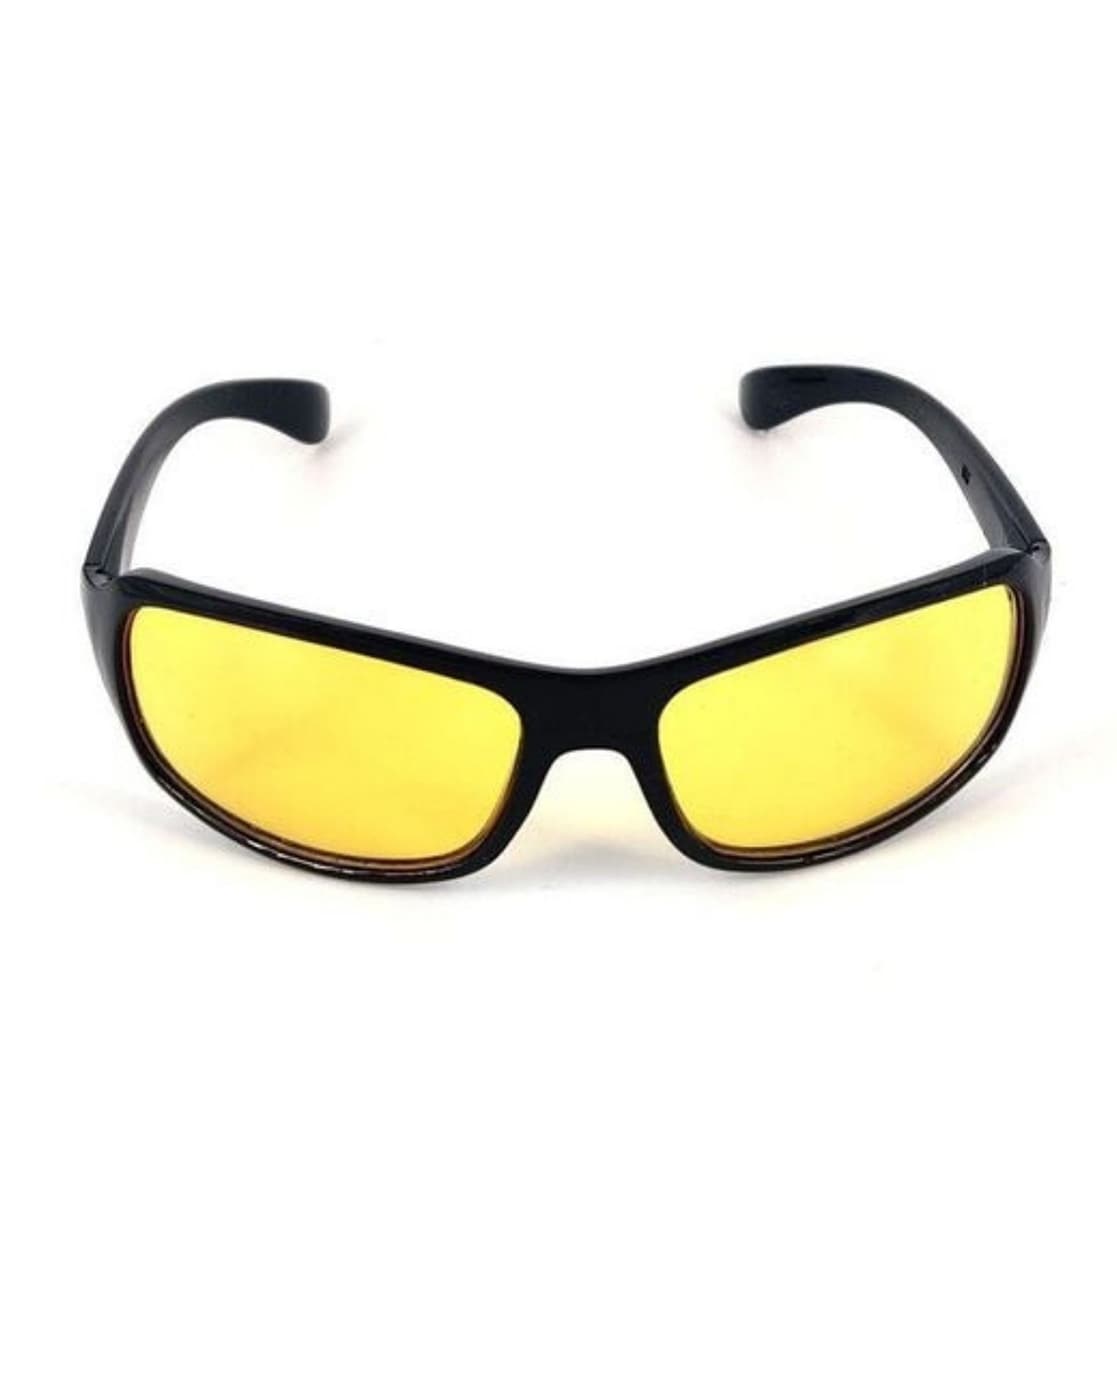 Buy Yellow & Black Sunglasses for Men by Vast Online